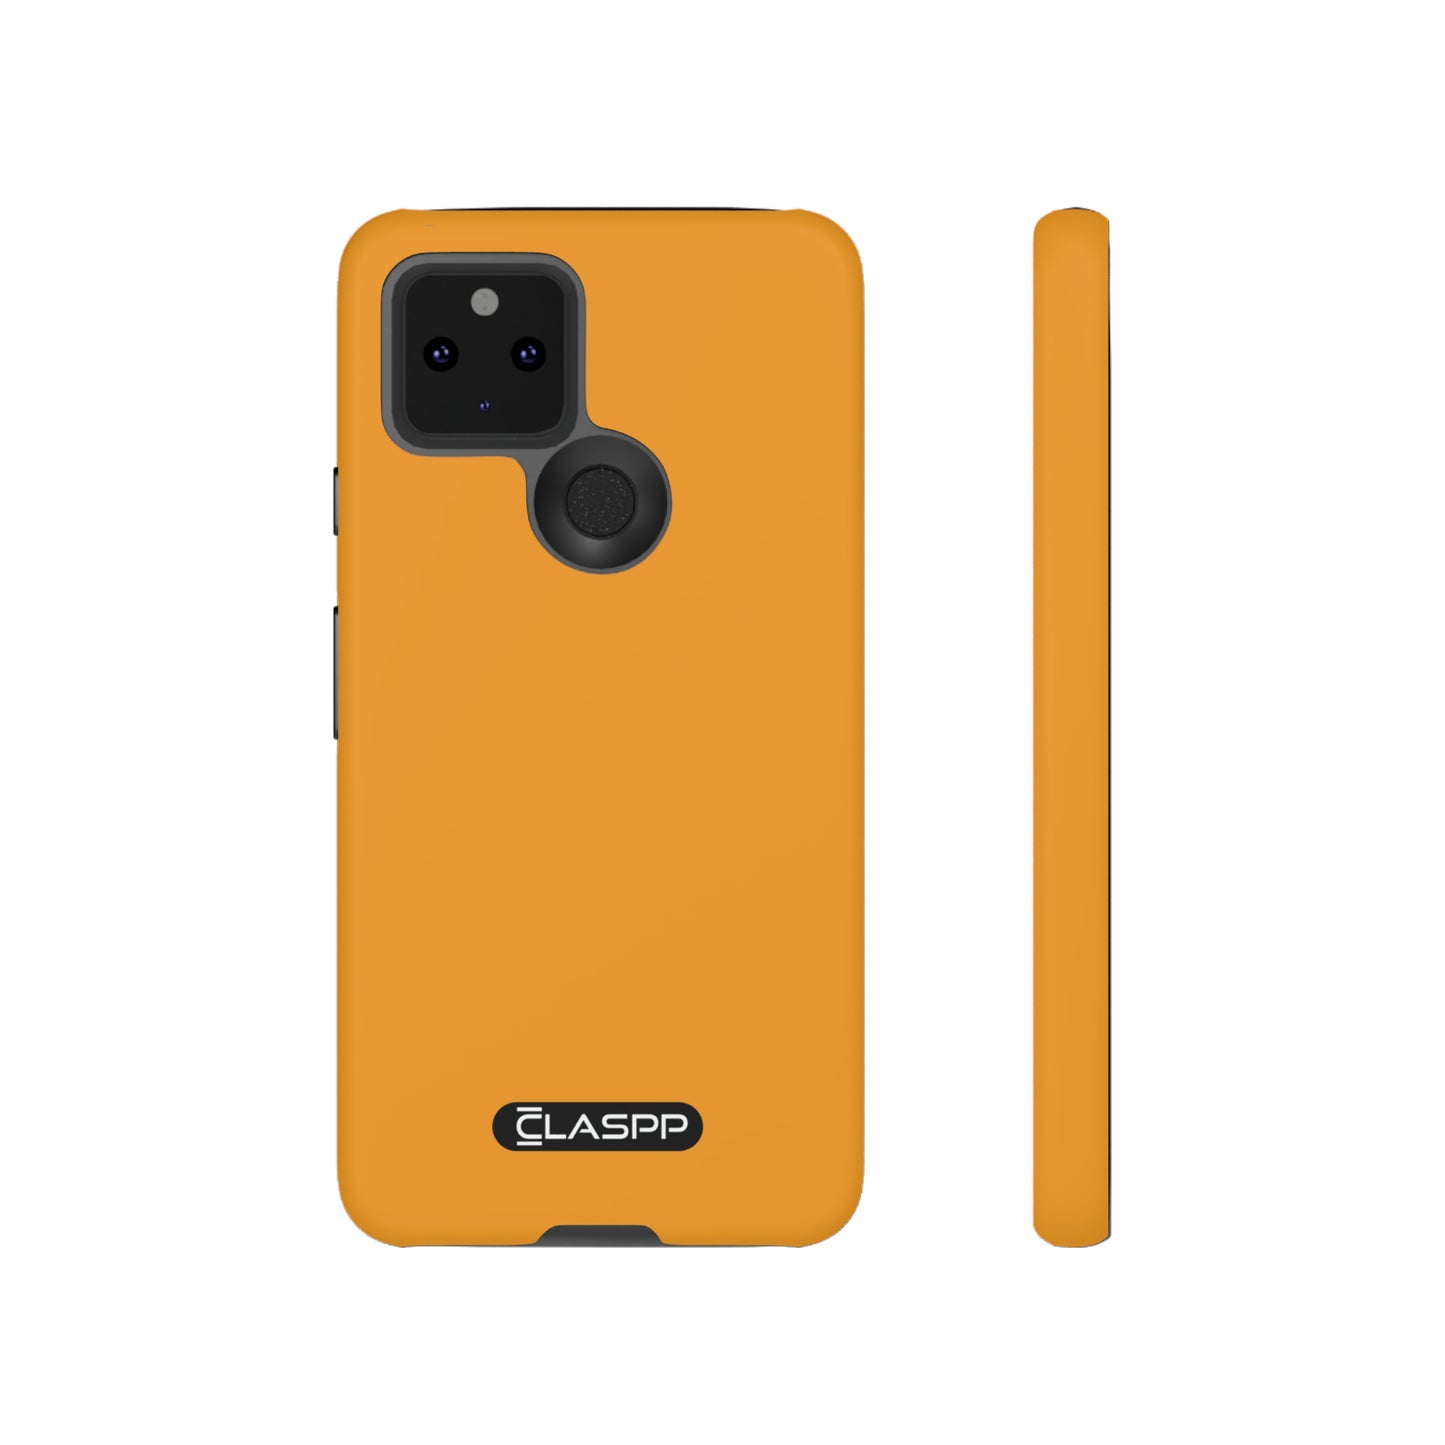 Safari Gold | Hardshell Dual Layer Phone Case